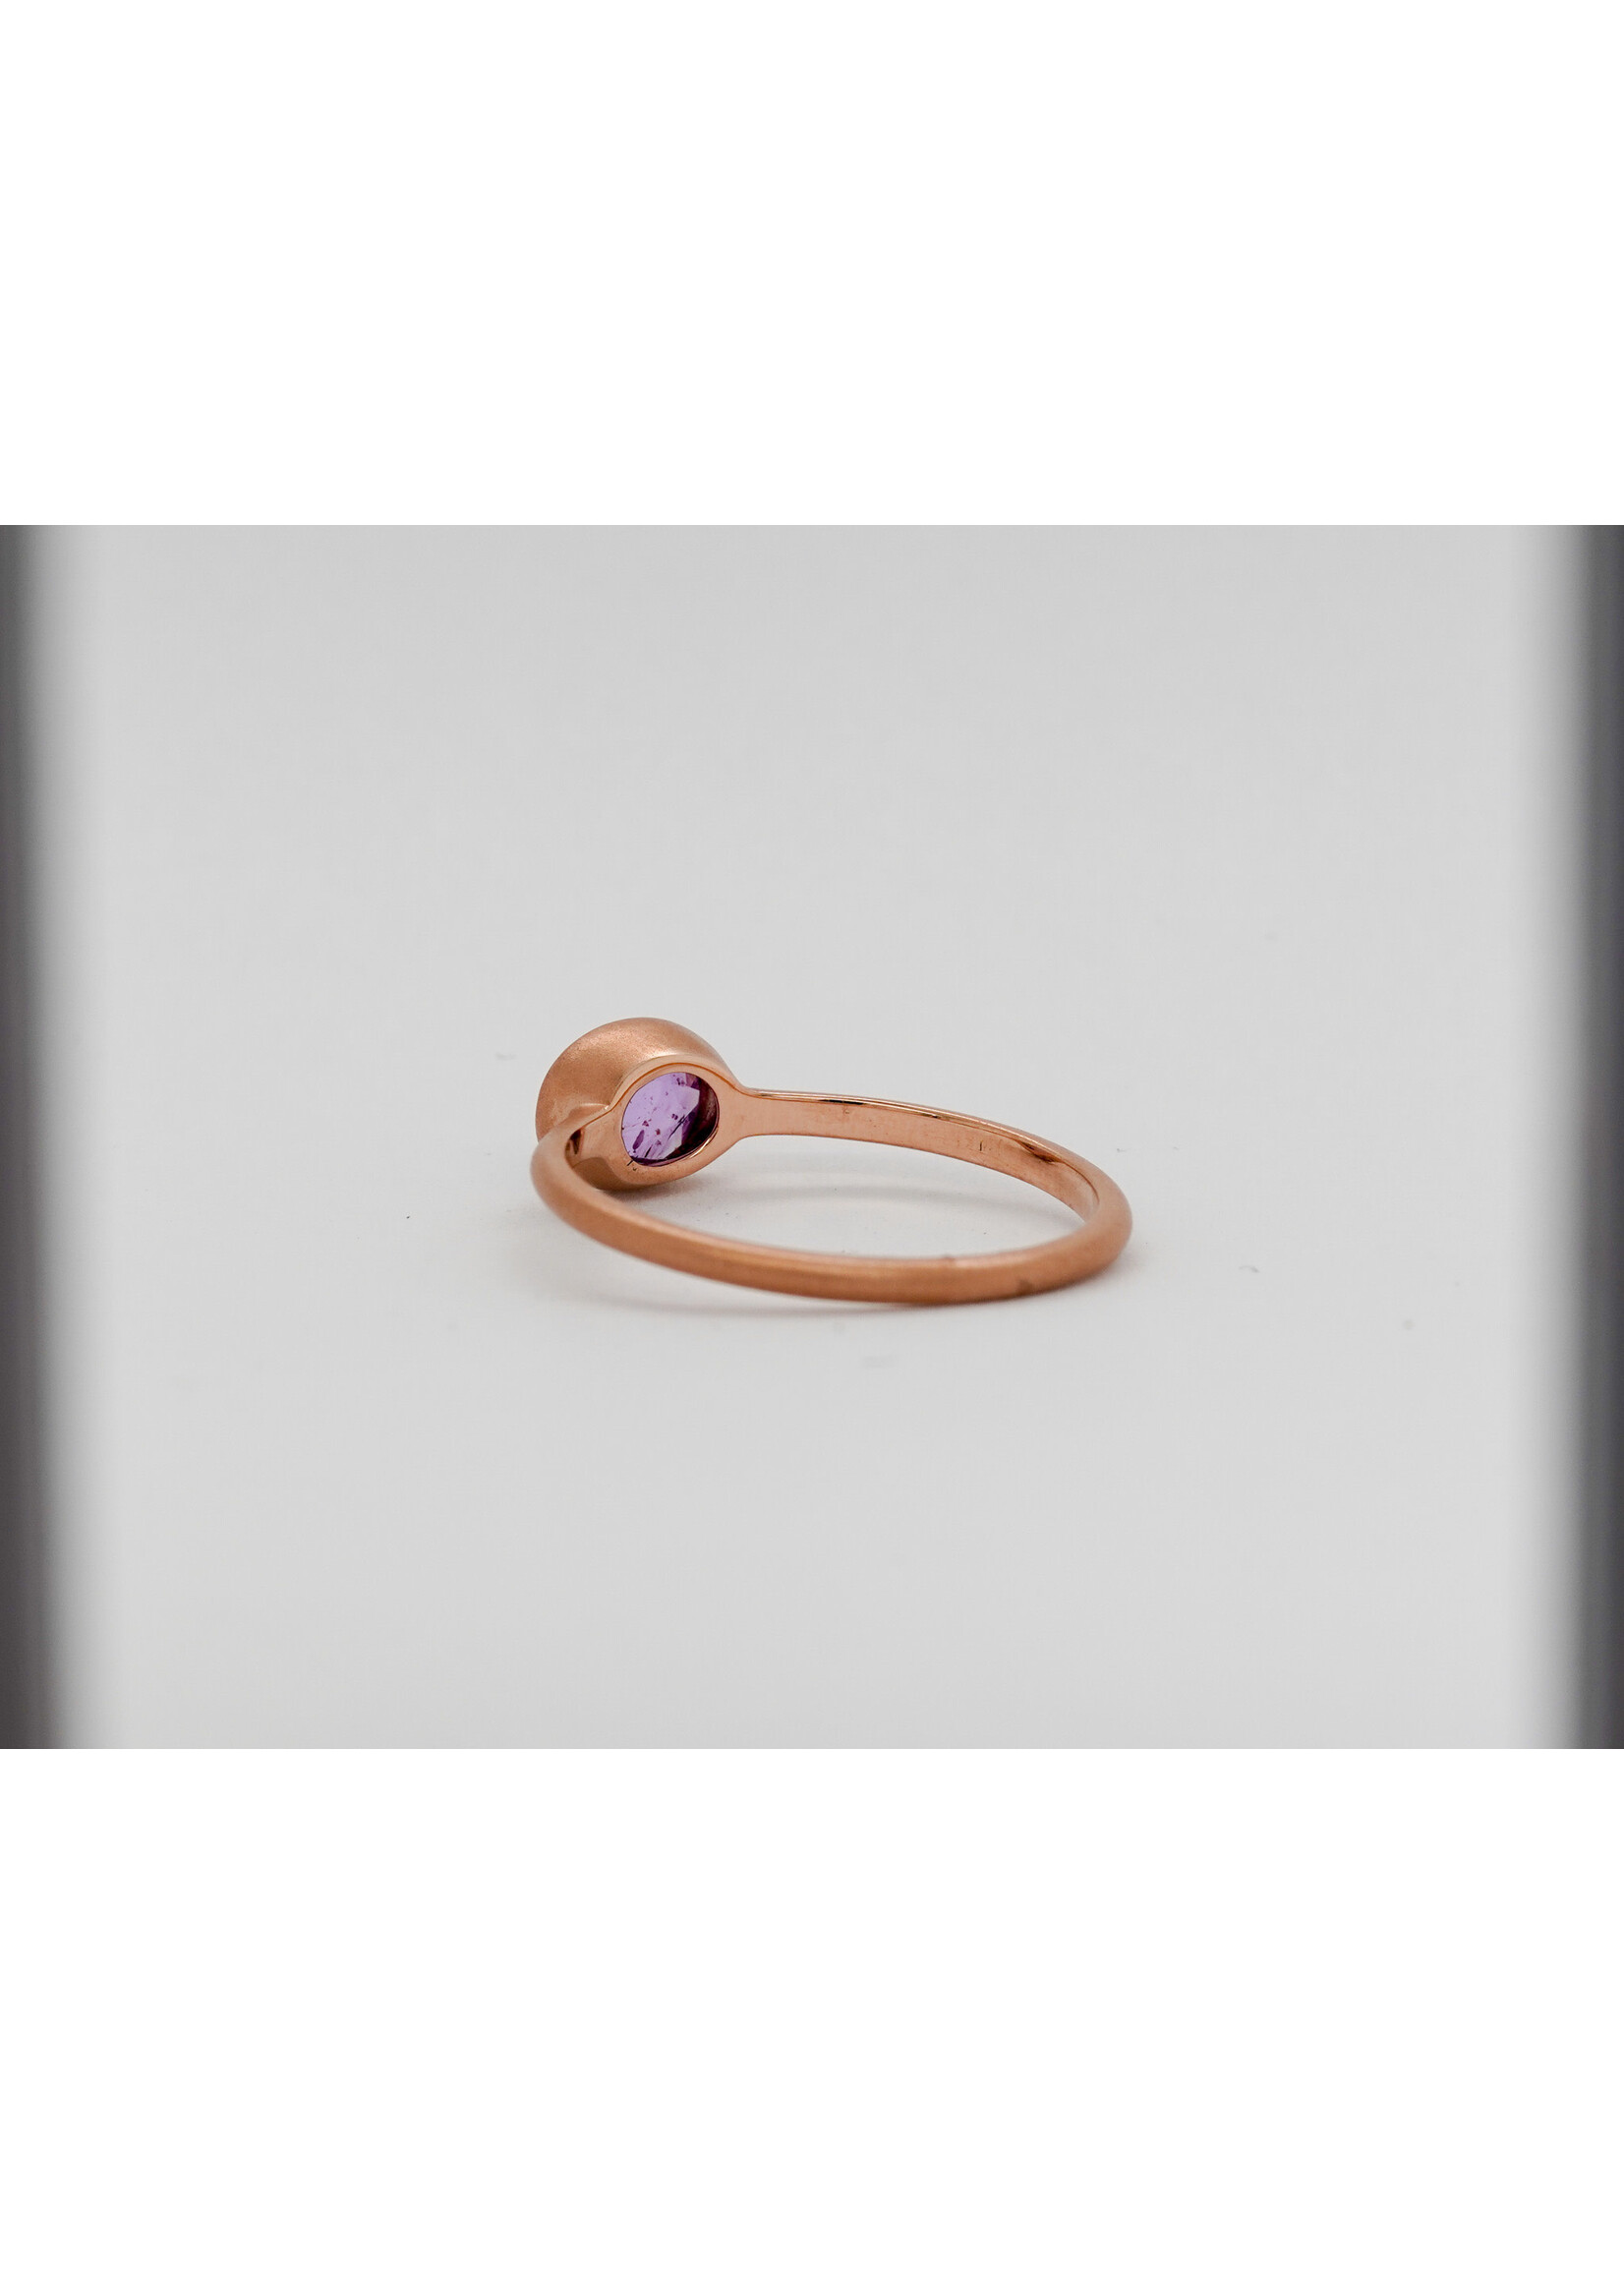 14KR 1.5g .61ct Oval Lavender Sapphire Bezel Ring (size 7)